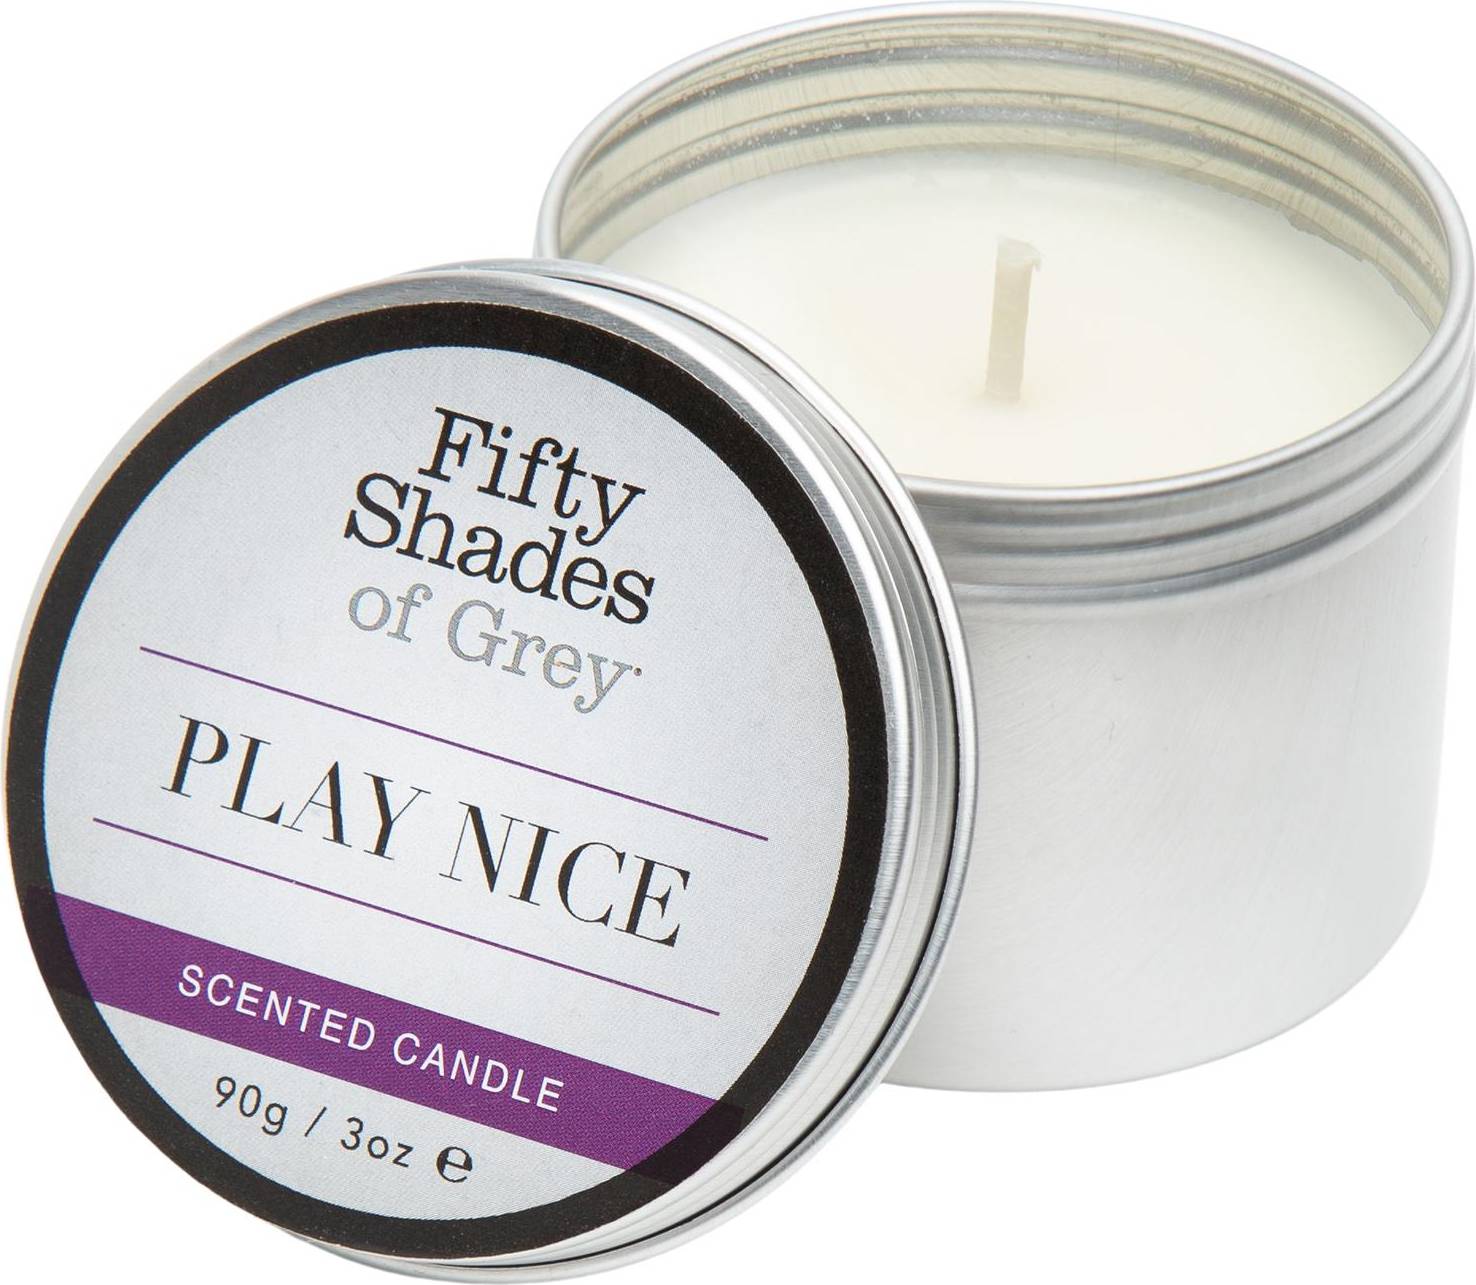  Bild på Fifty Shades of Grey Play Nice Vanilla Candle vibrator